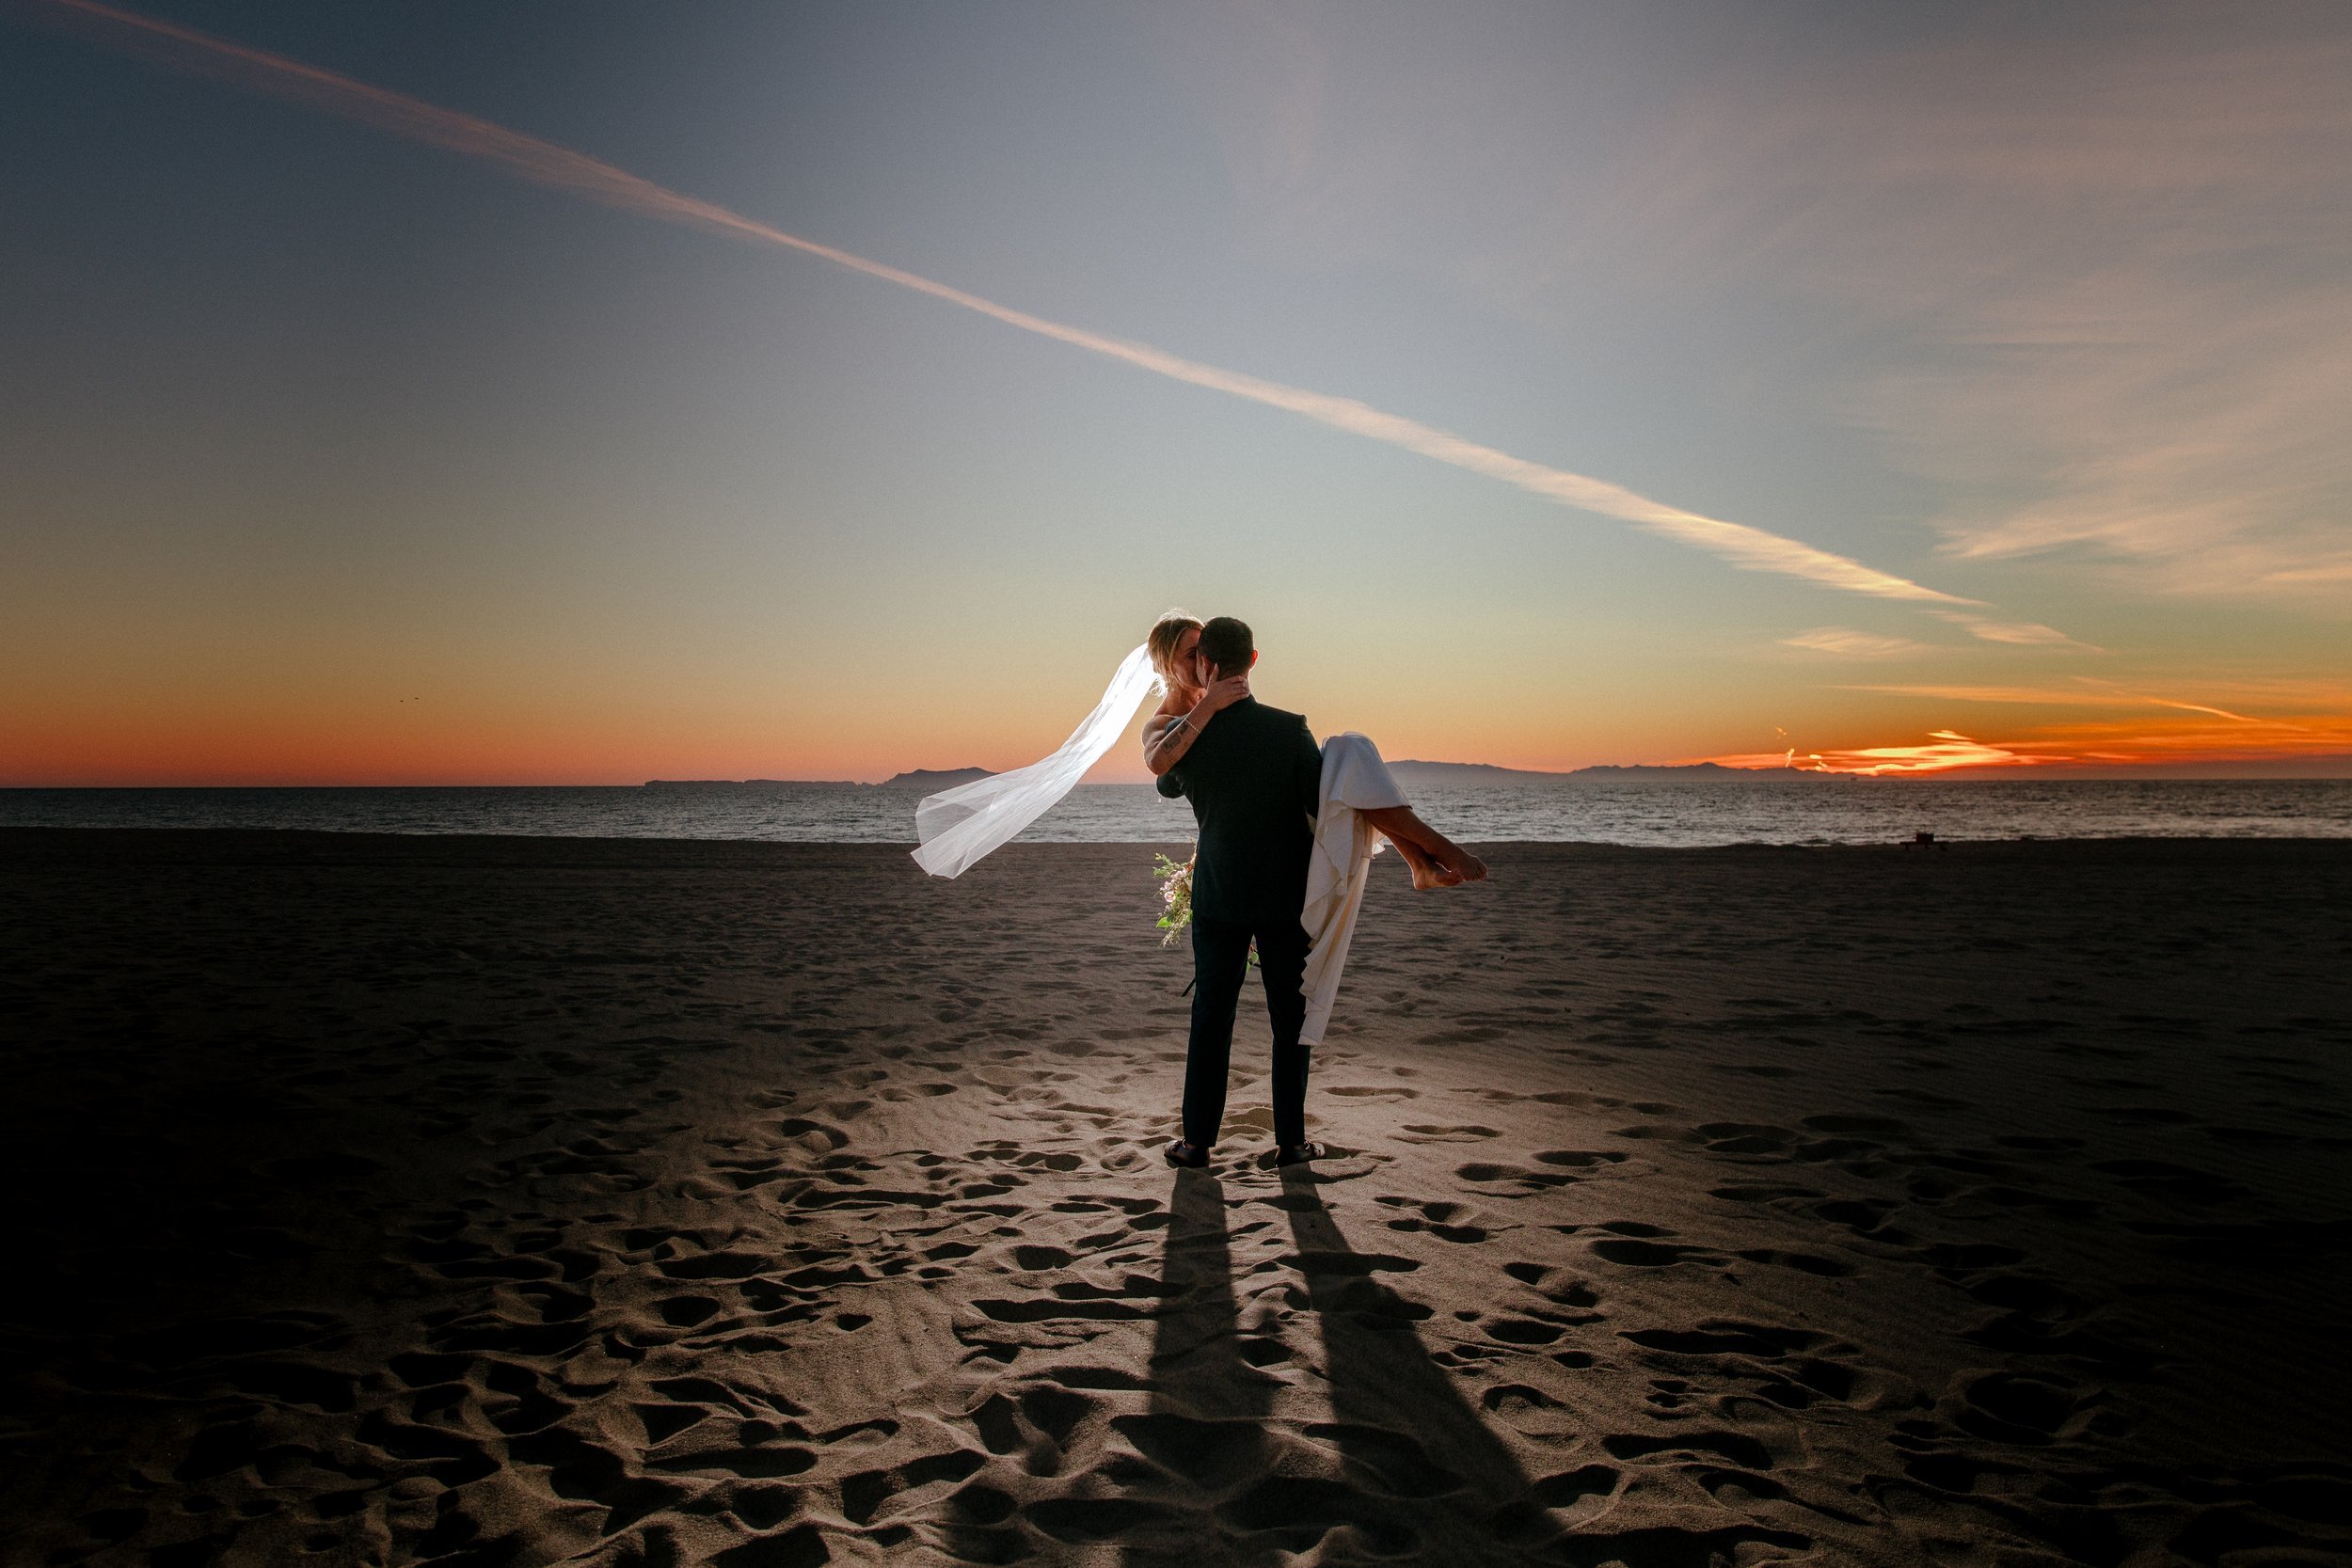 www.santabarbarawedding.com | Chris J. Evans | Paul Smith Suit | Groom Holding His Bride on the Beach at Sunset